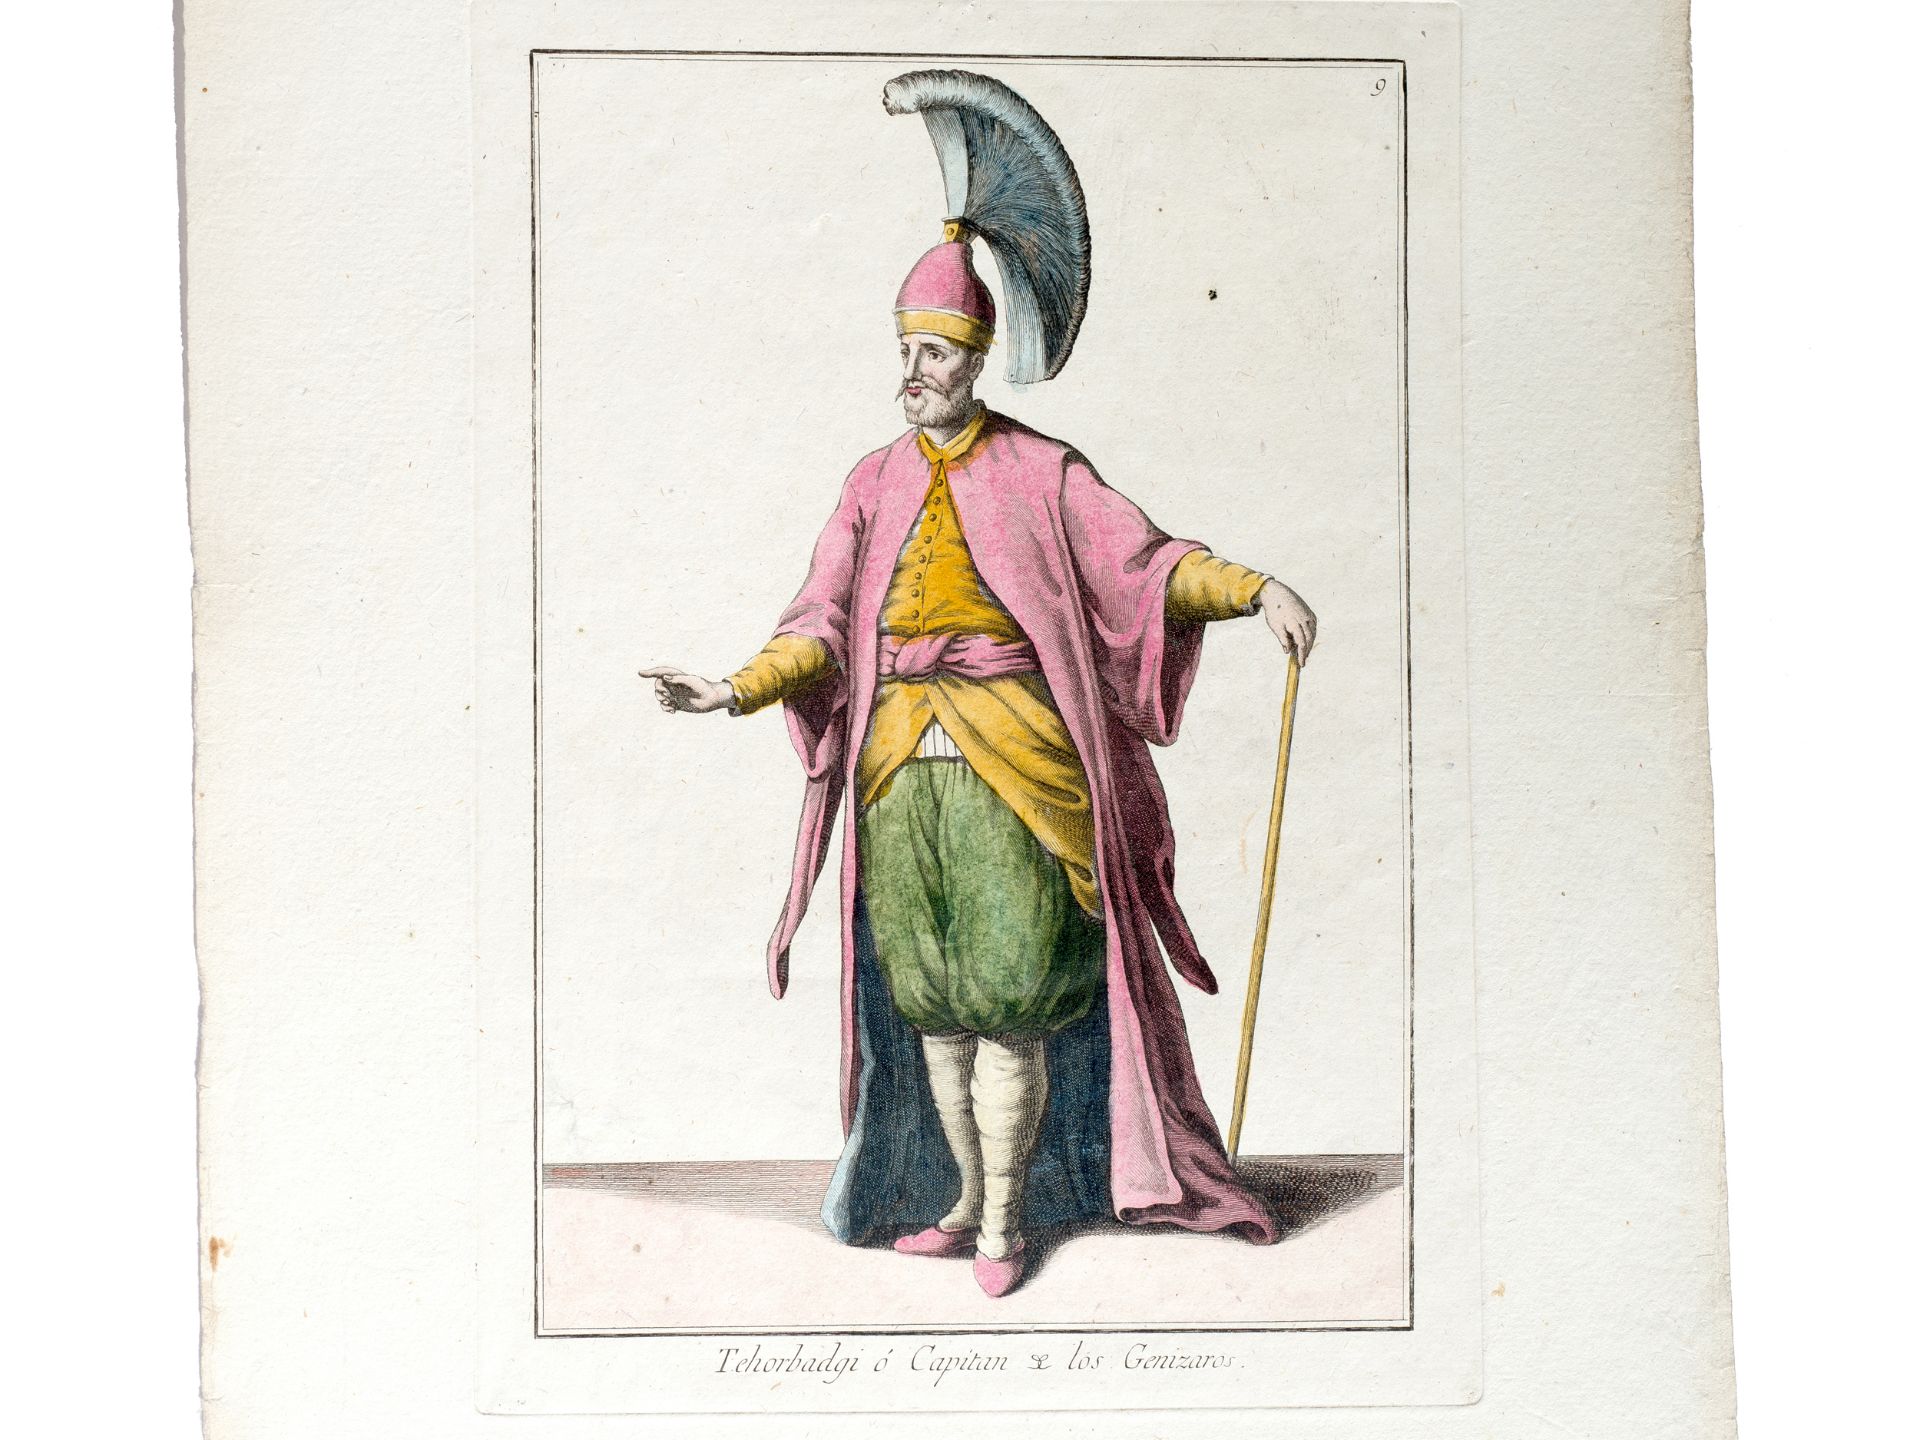 "Tehorbadgi ó Capitan de los Genizaros", From a book of historical costume studies?, Spain